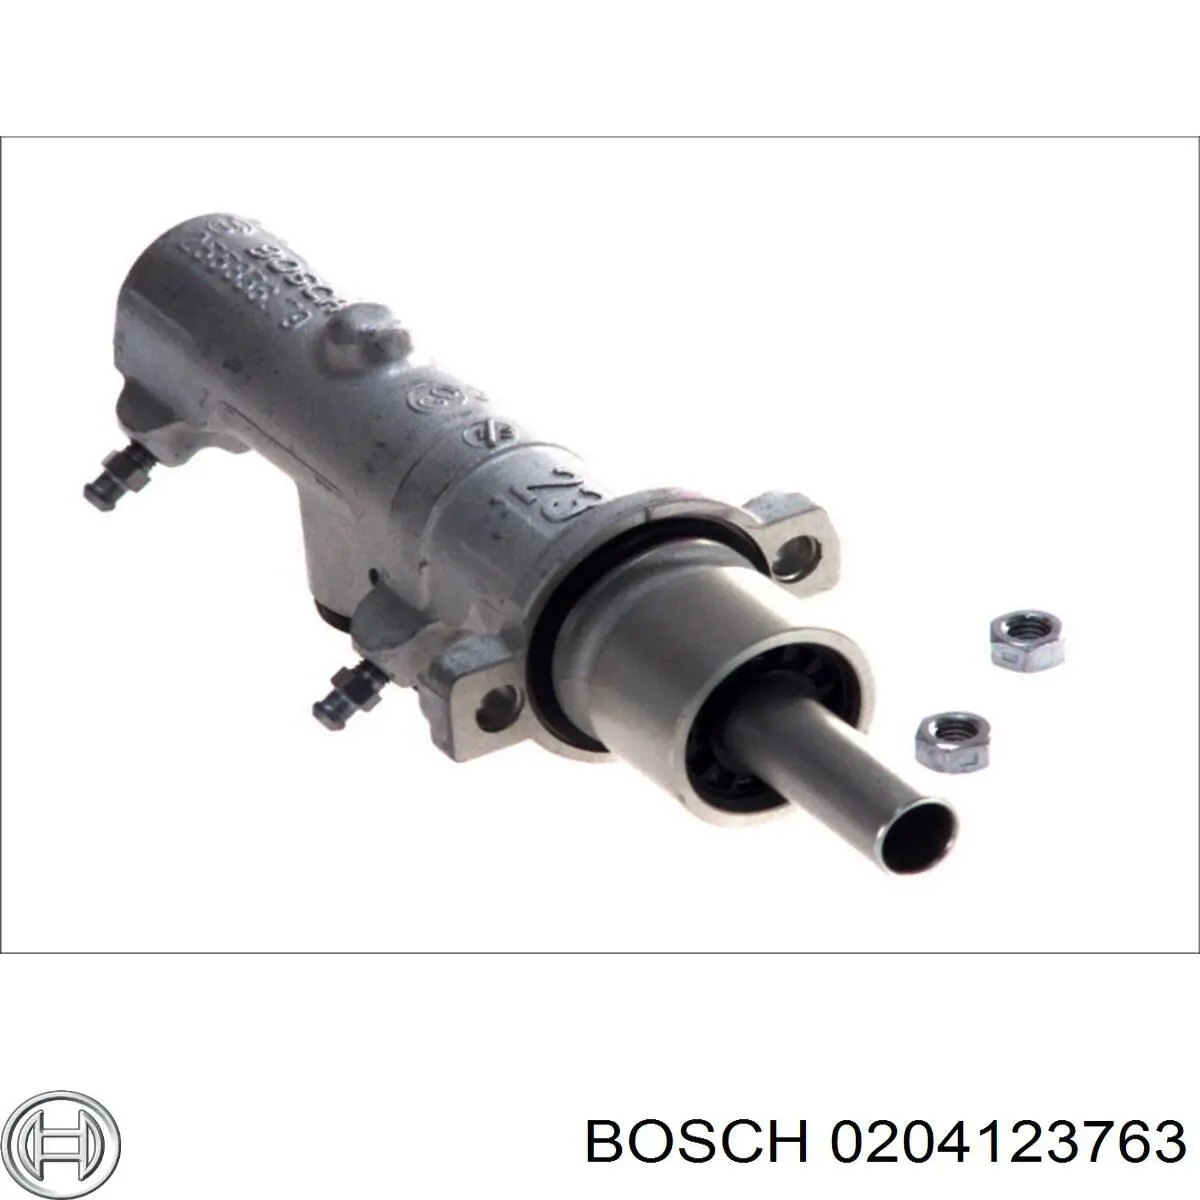 0204123763 Bosch bomba de freno